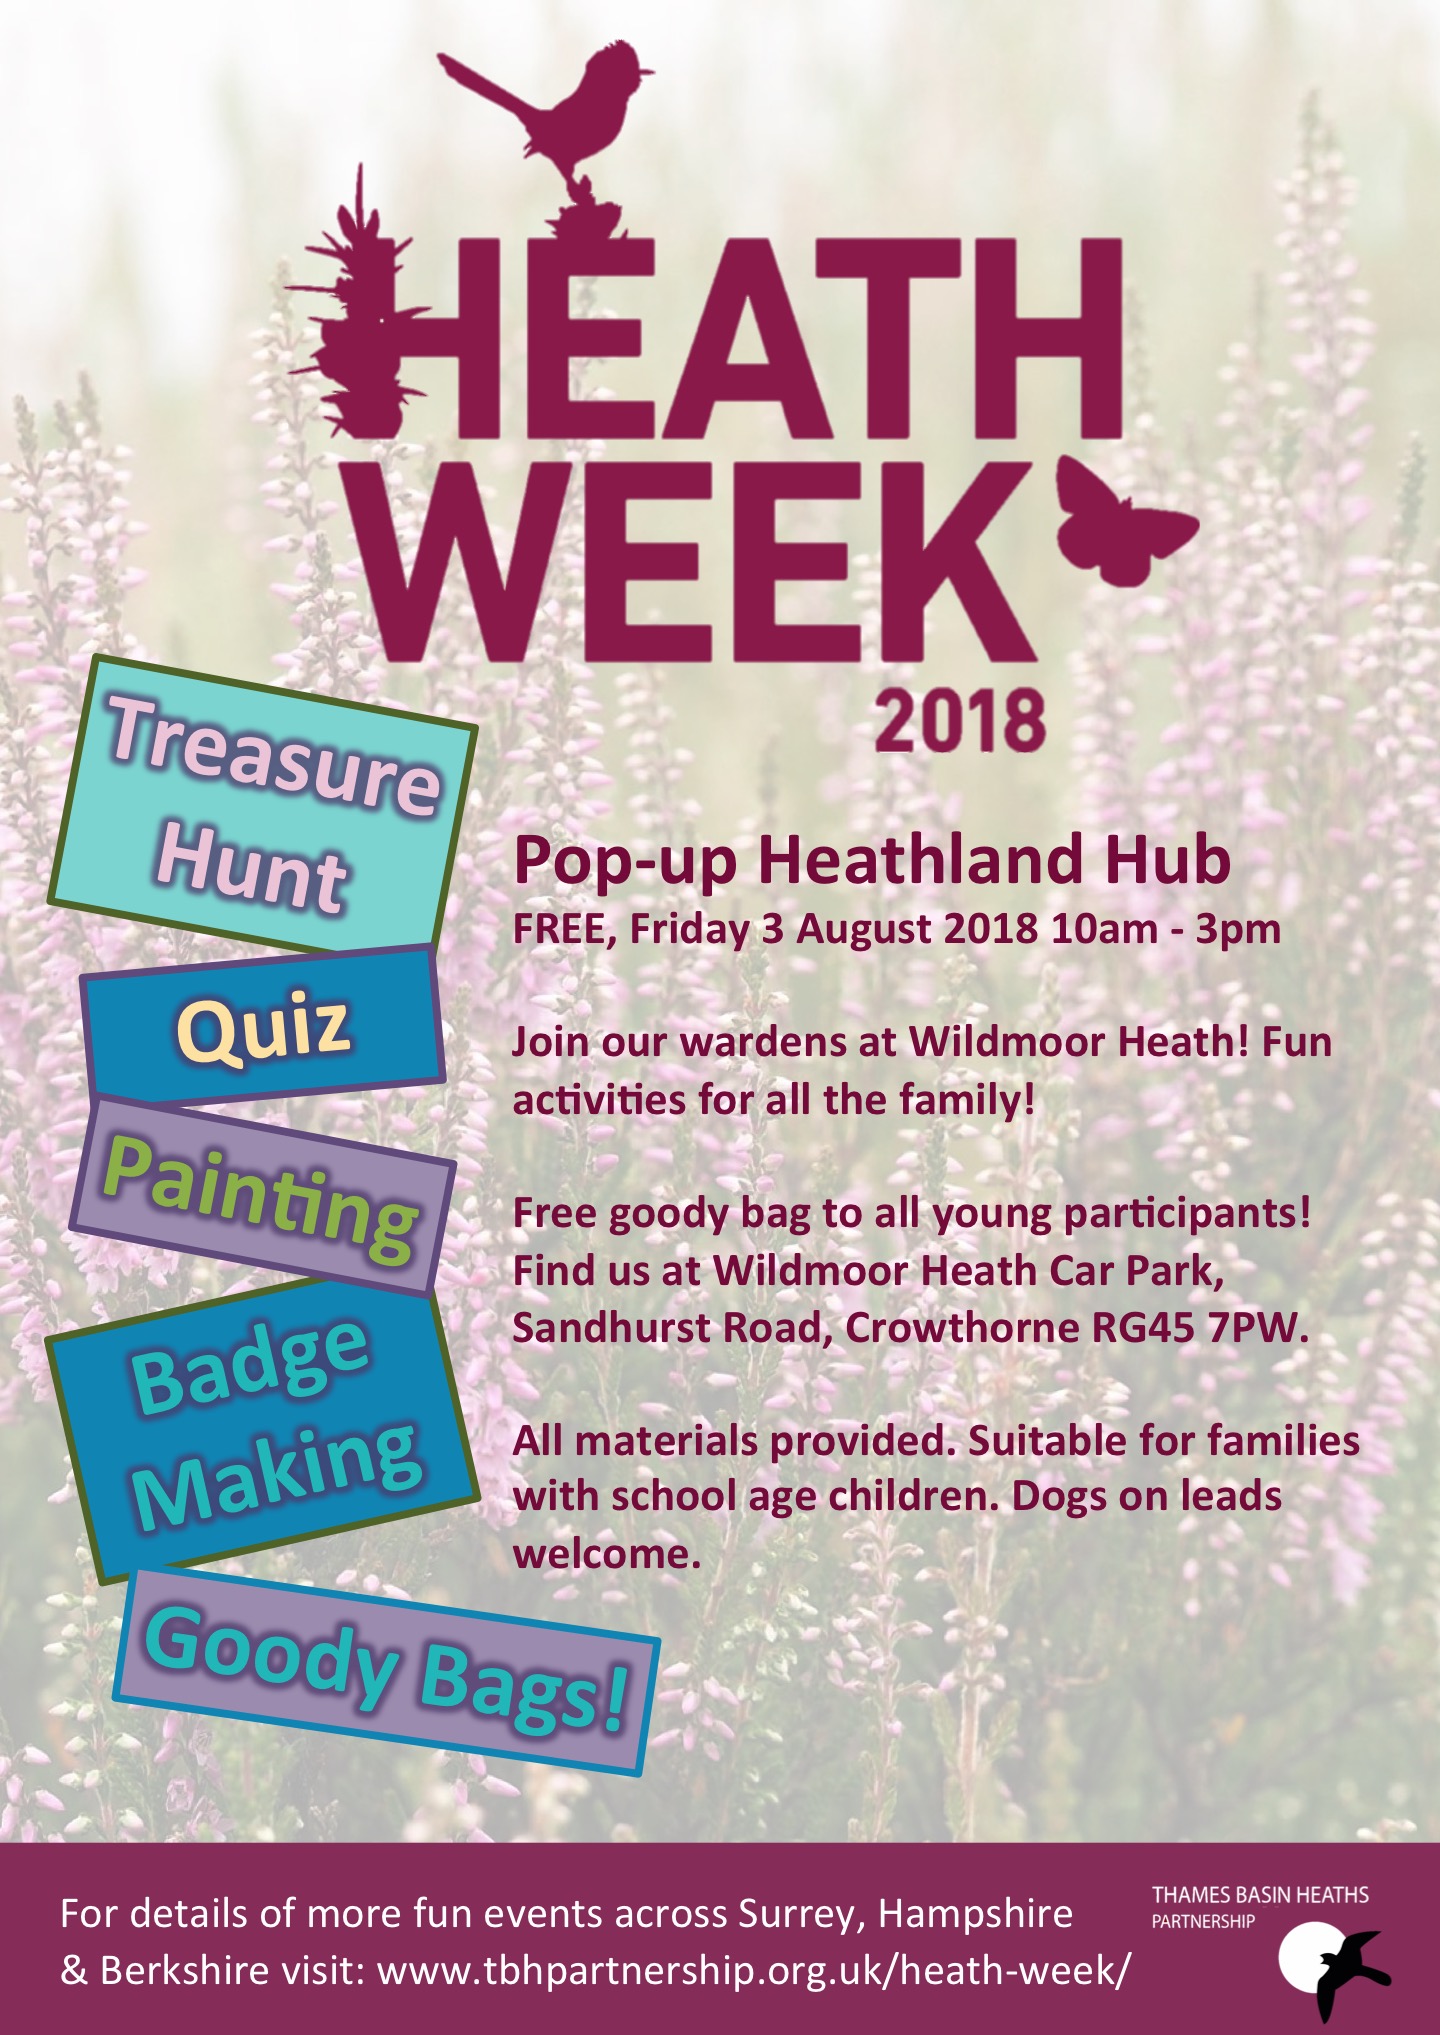 Heath Week Poster for Pop-up Heathland Hub